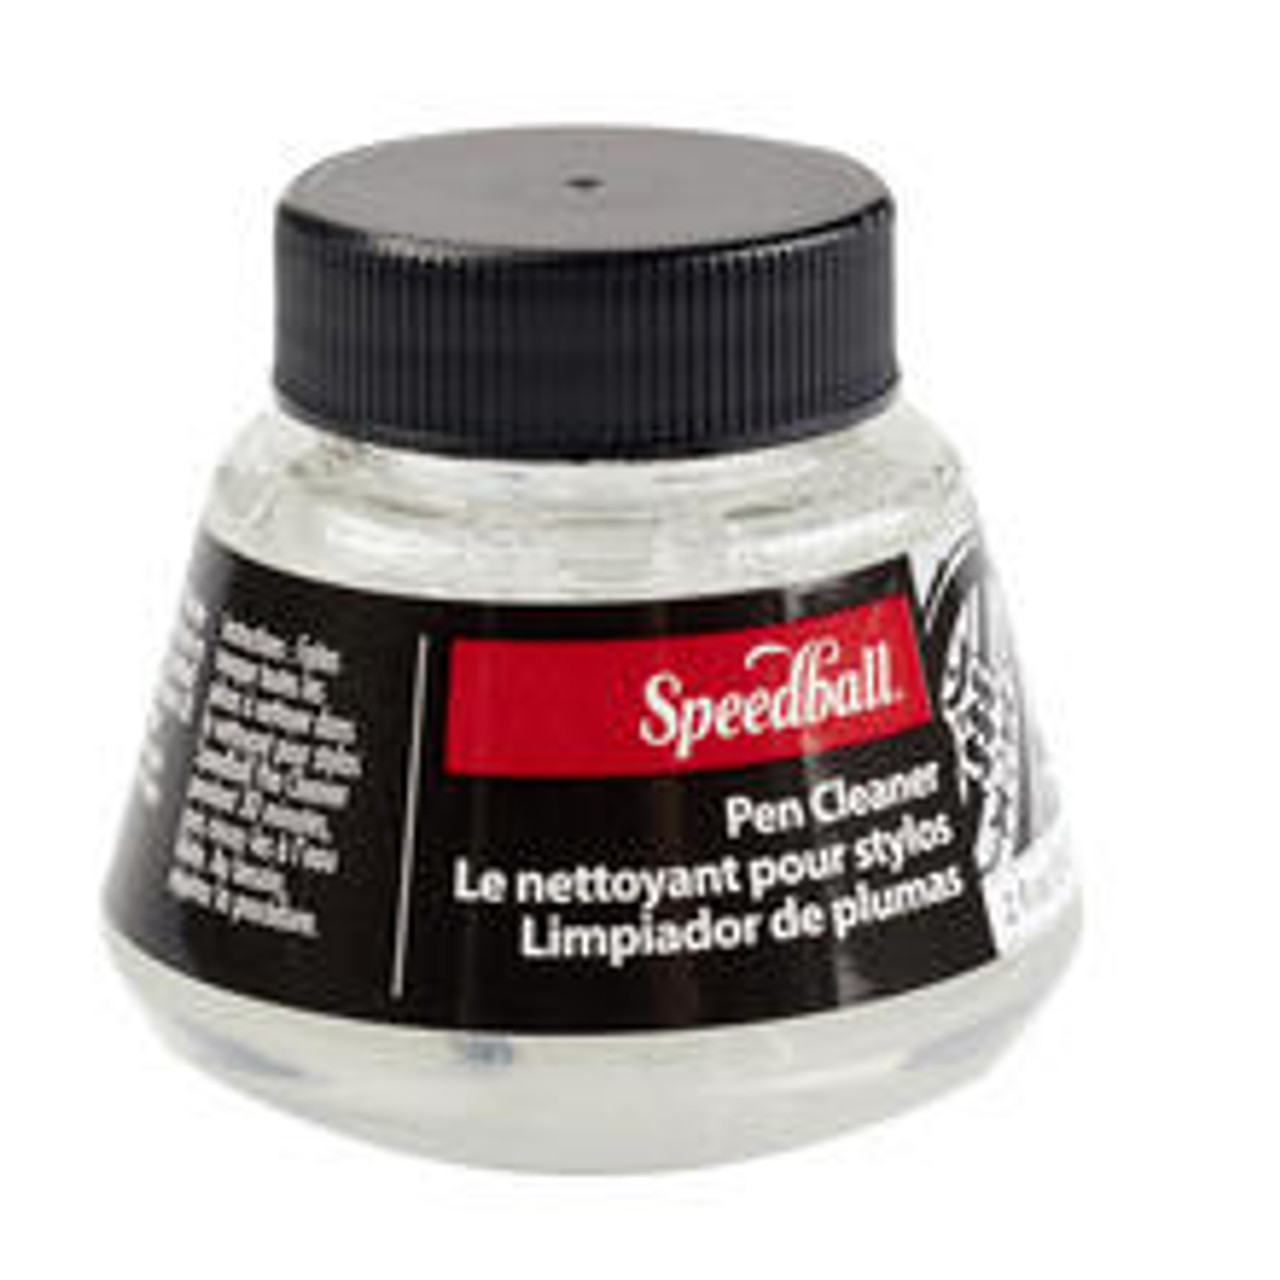 Speedball - Pigmented Acrylic Ink - 2 oz. - Super Pigmented Ink - Pen  Cleaner - Sam Flax Atlanta